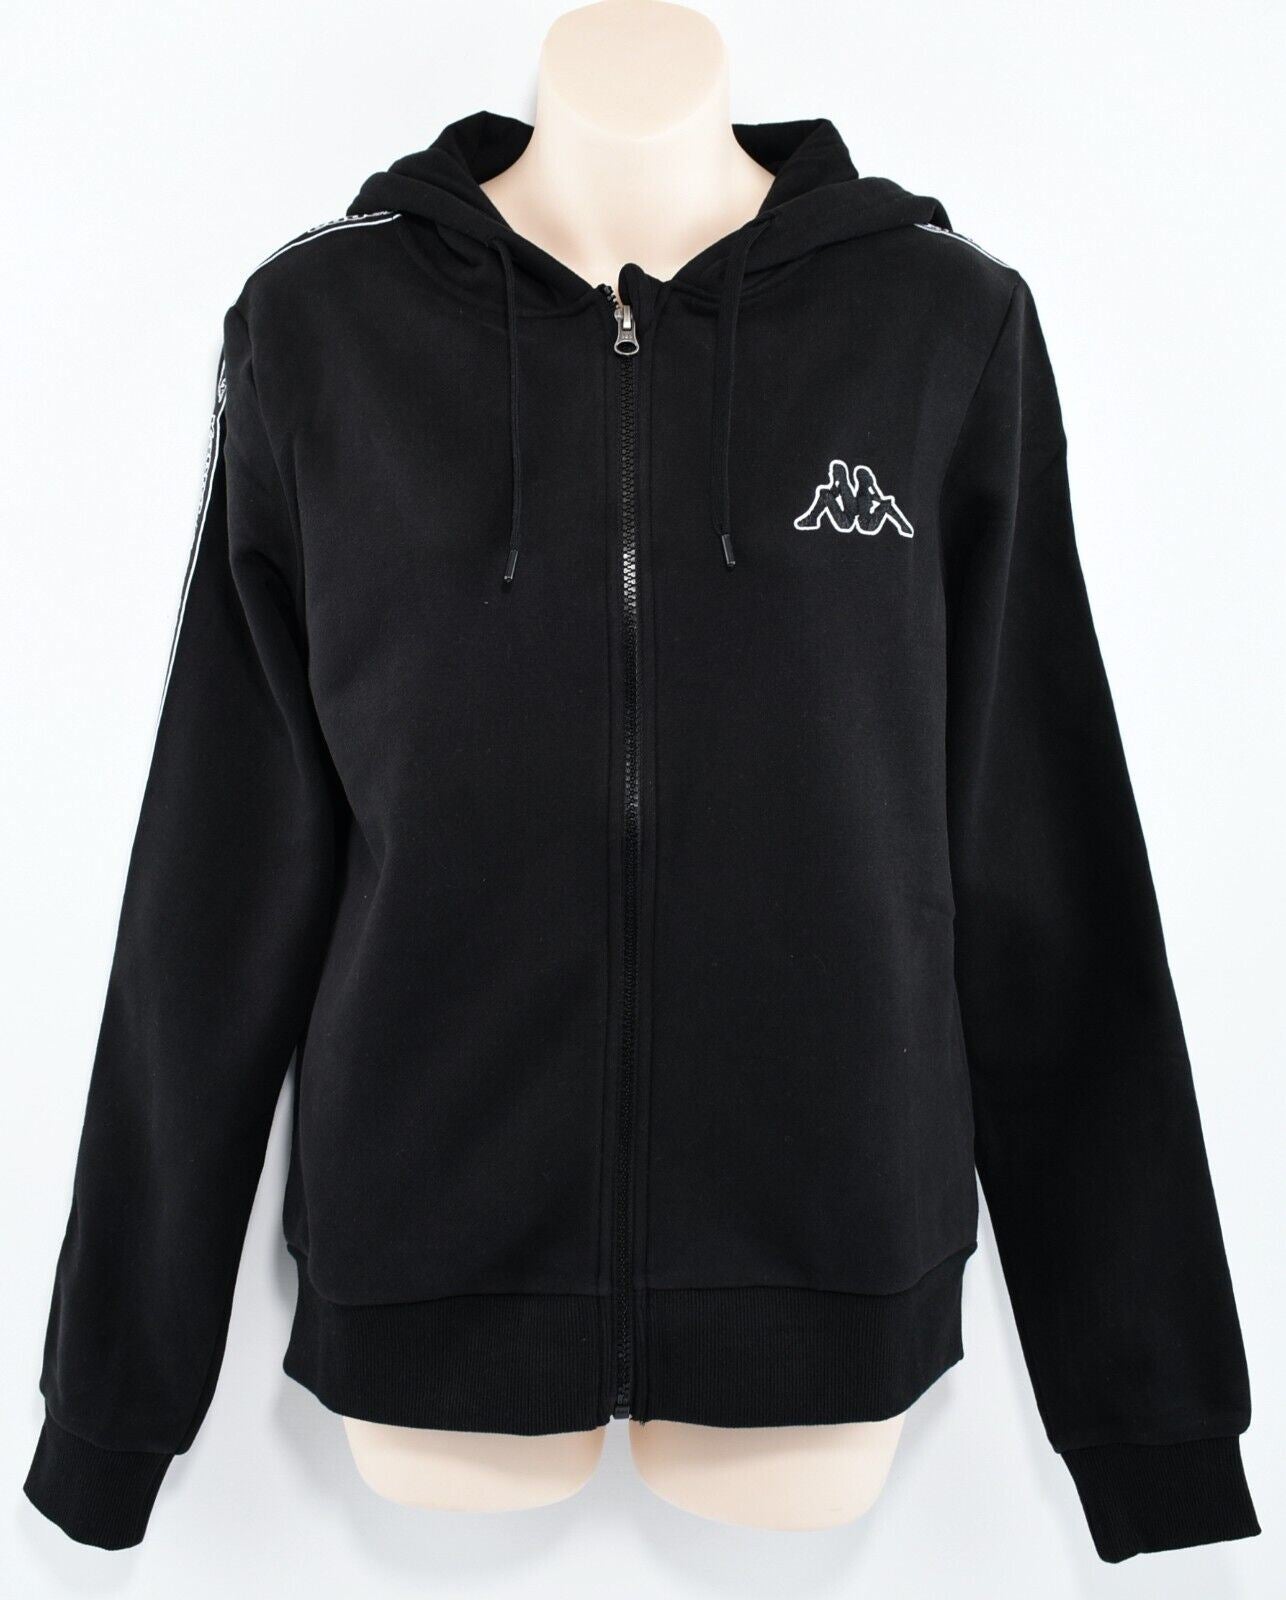 KAPPA Women's Full Zip Hoodie Jacket Sweatshirt, Black, size S (UK 10)